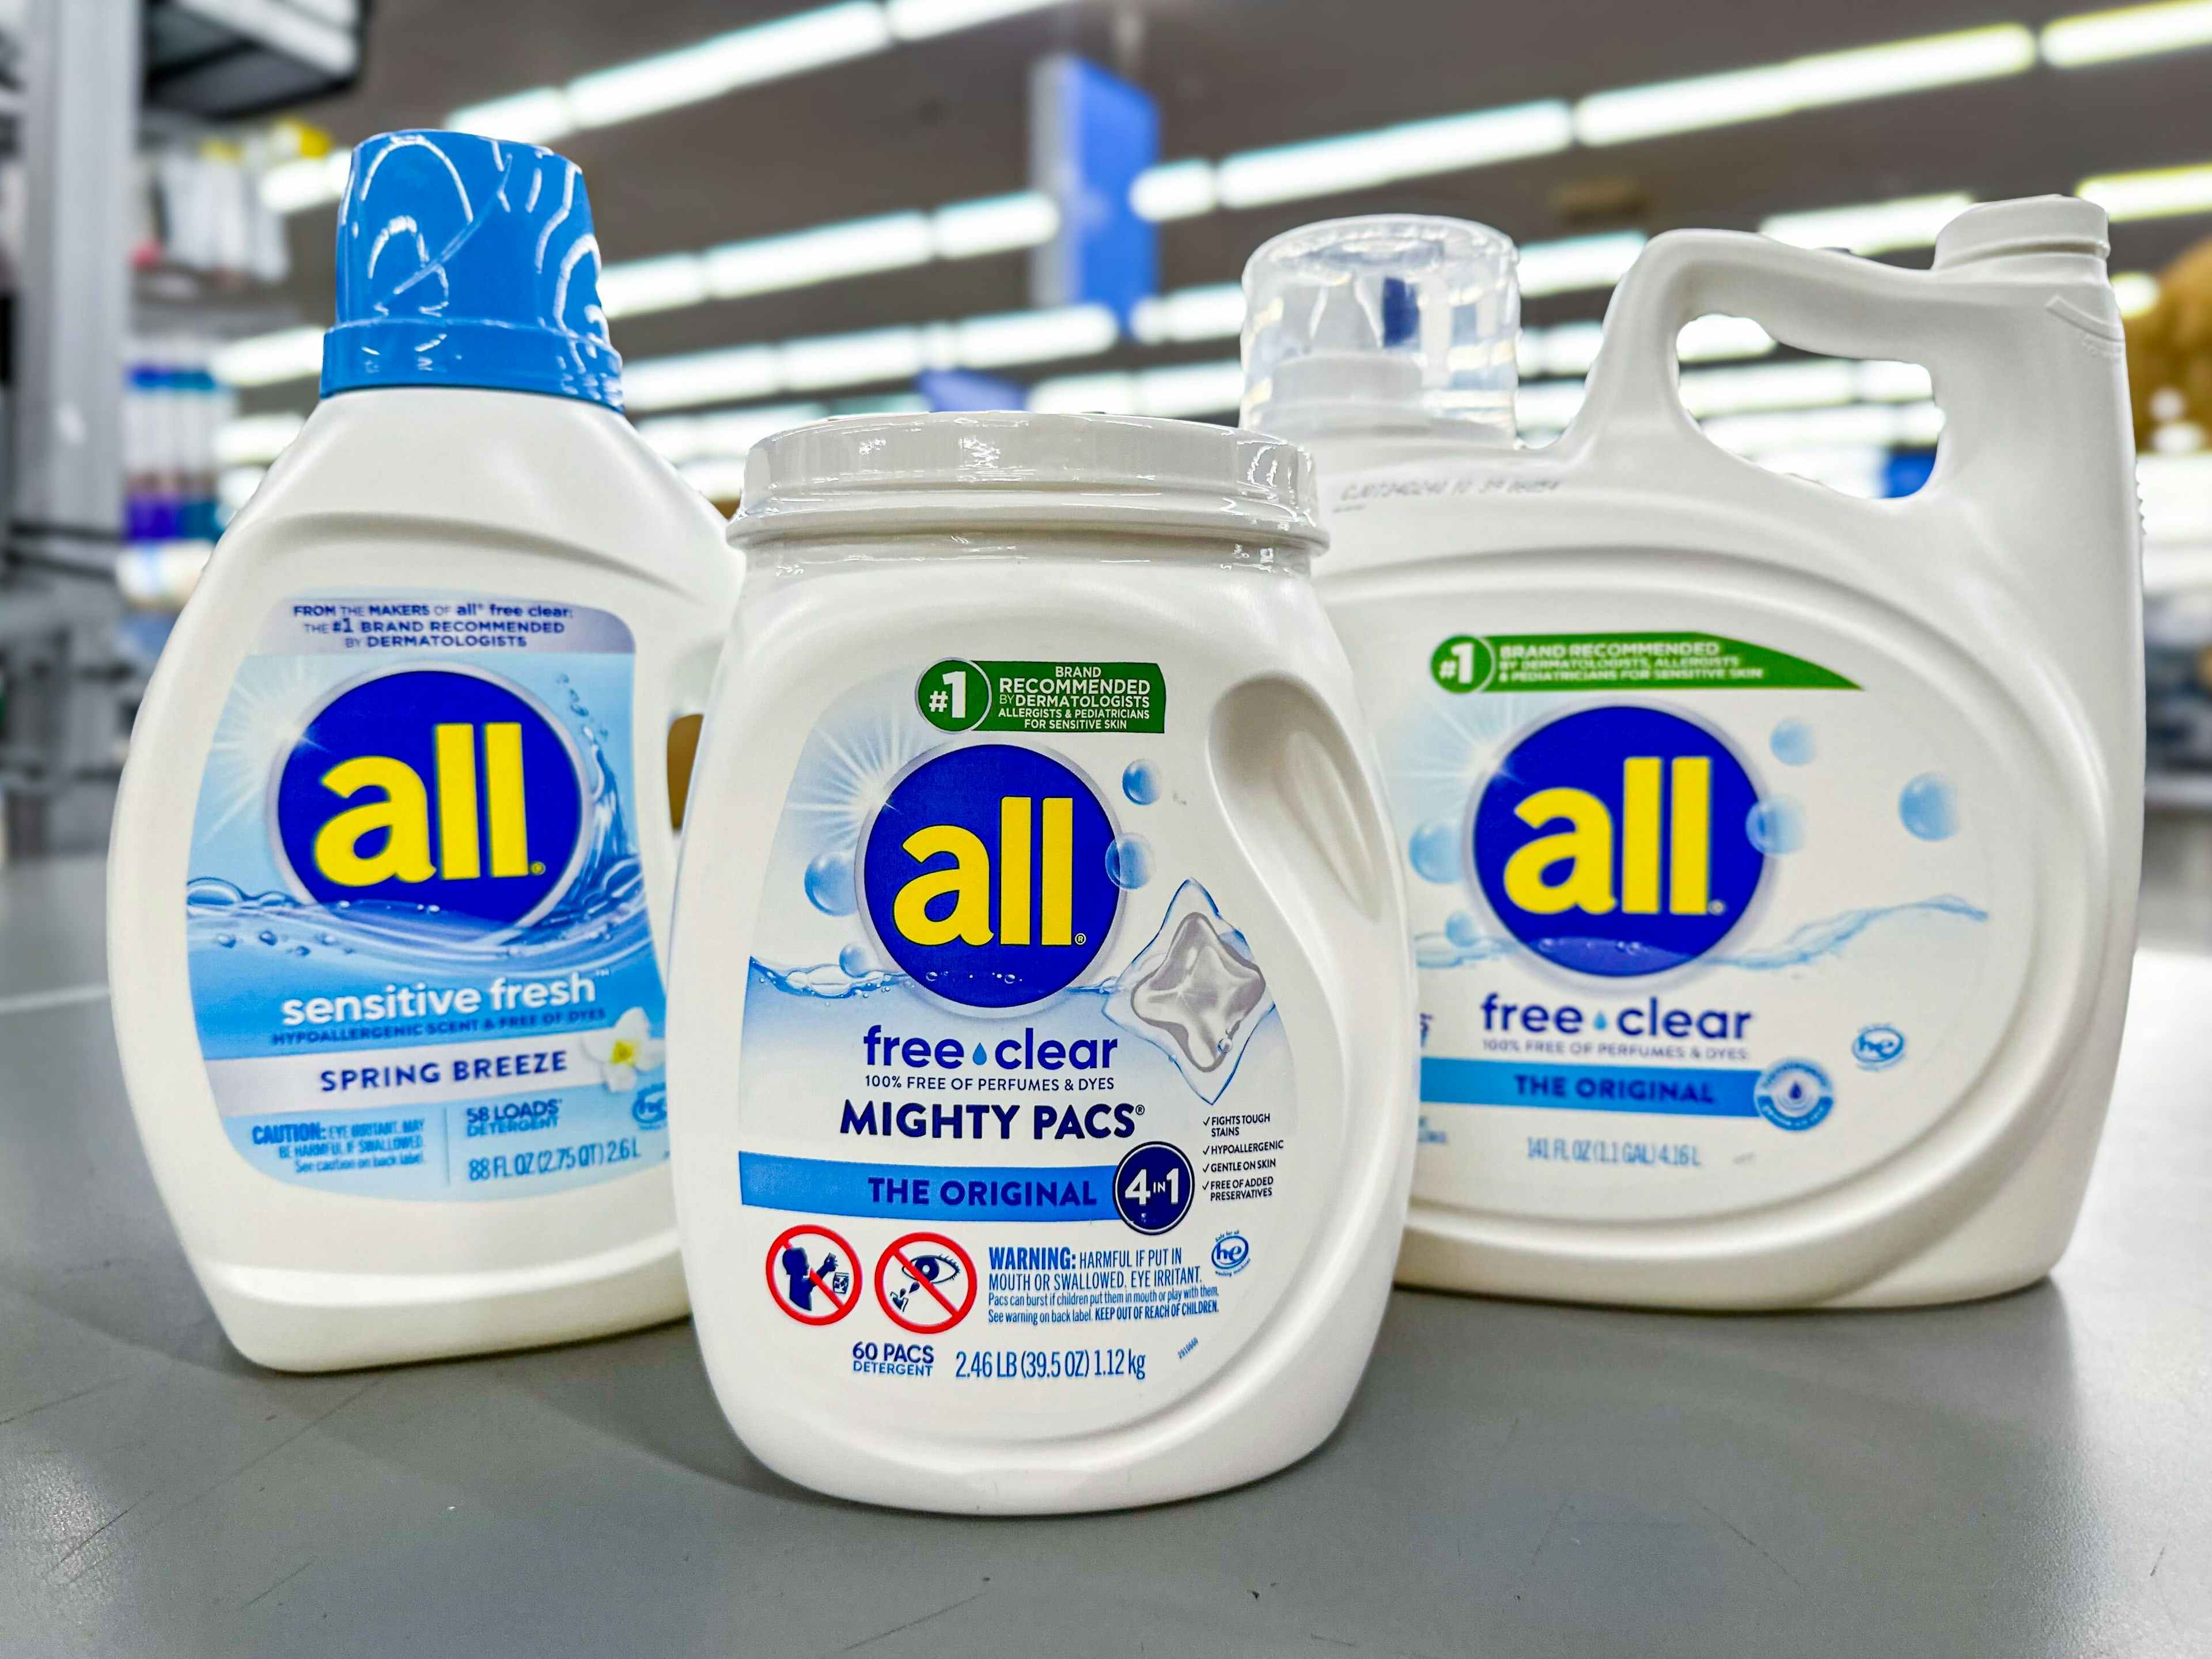 walmart-all-free-clear-detergent-2